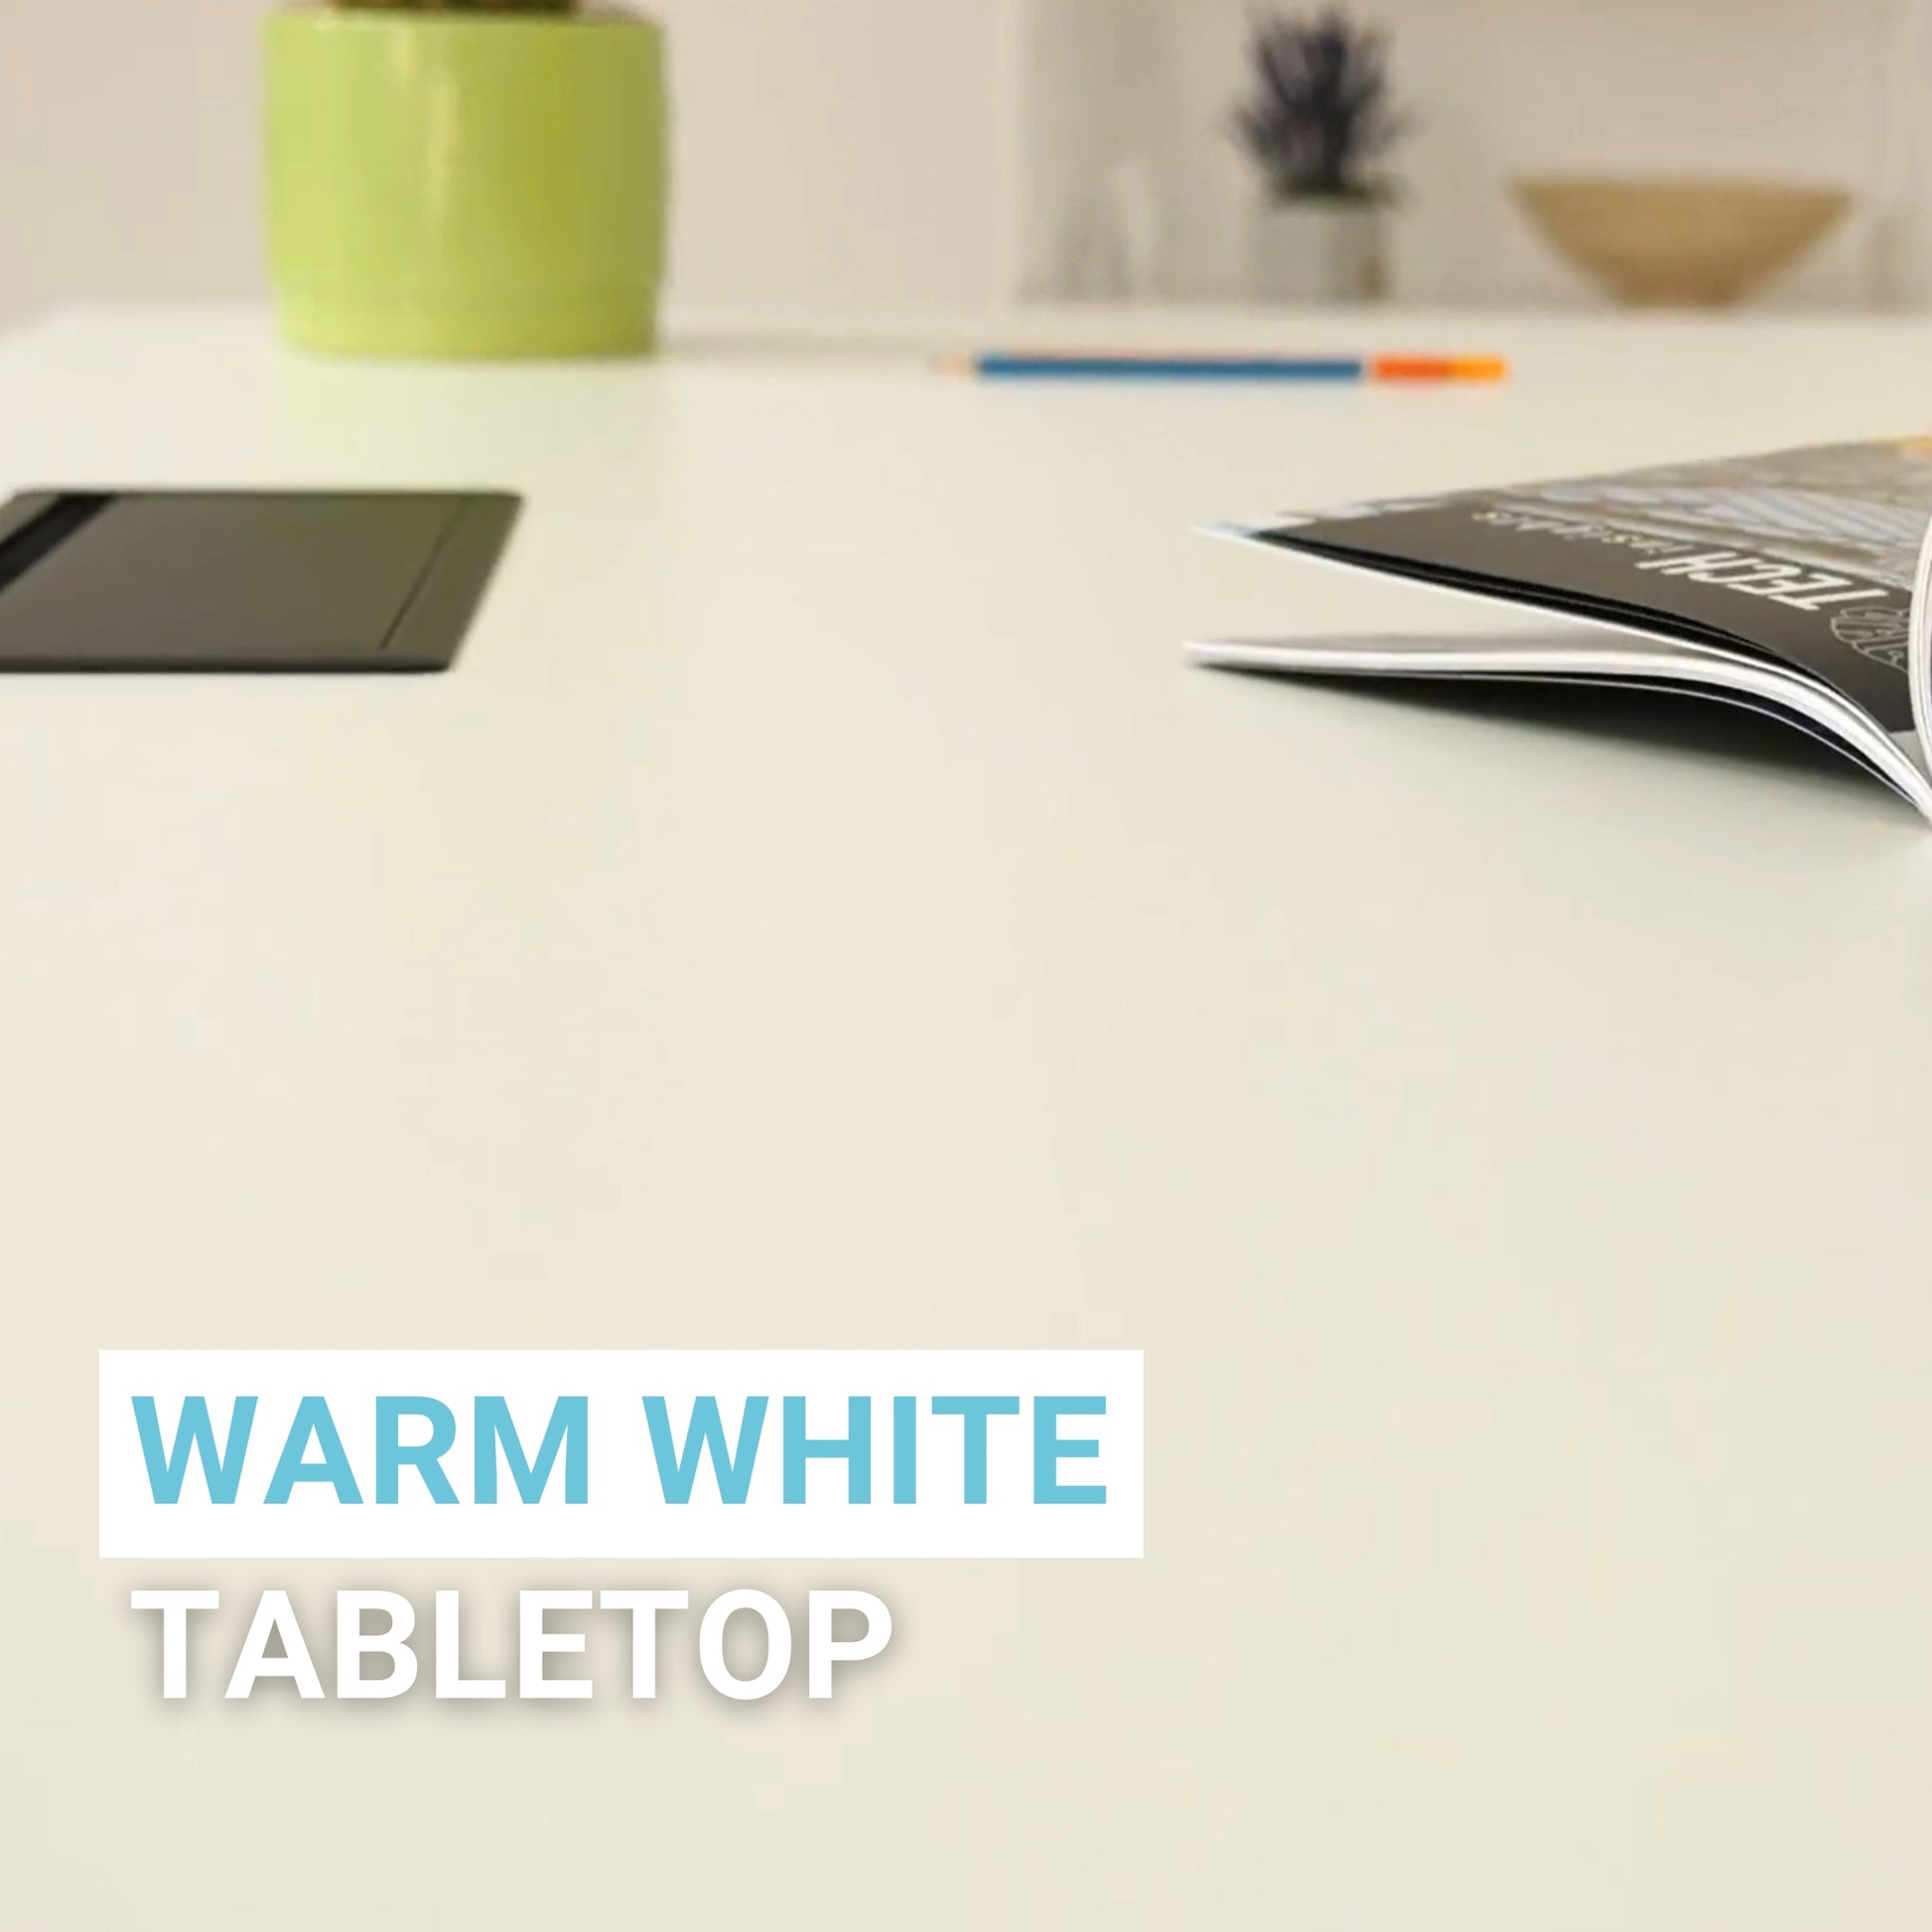 Warm White Tabletop